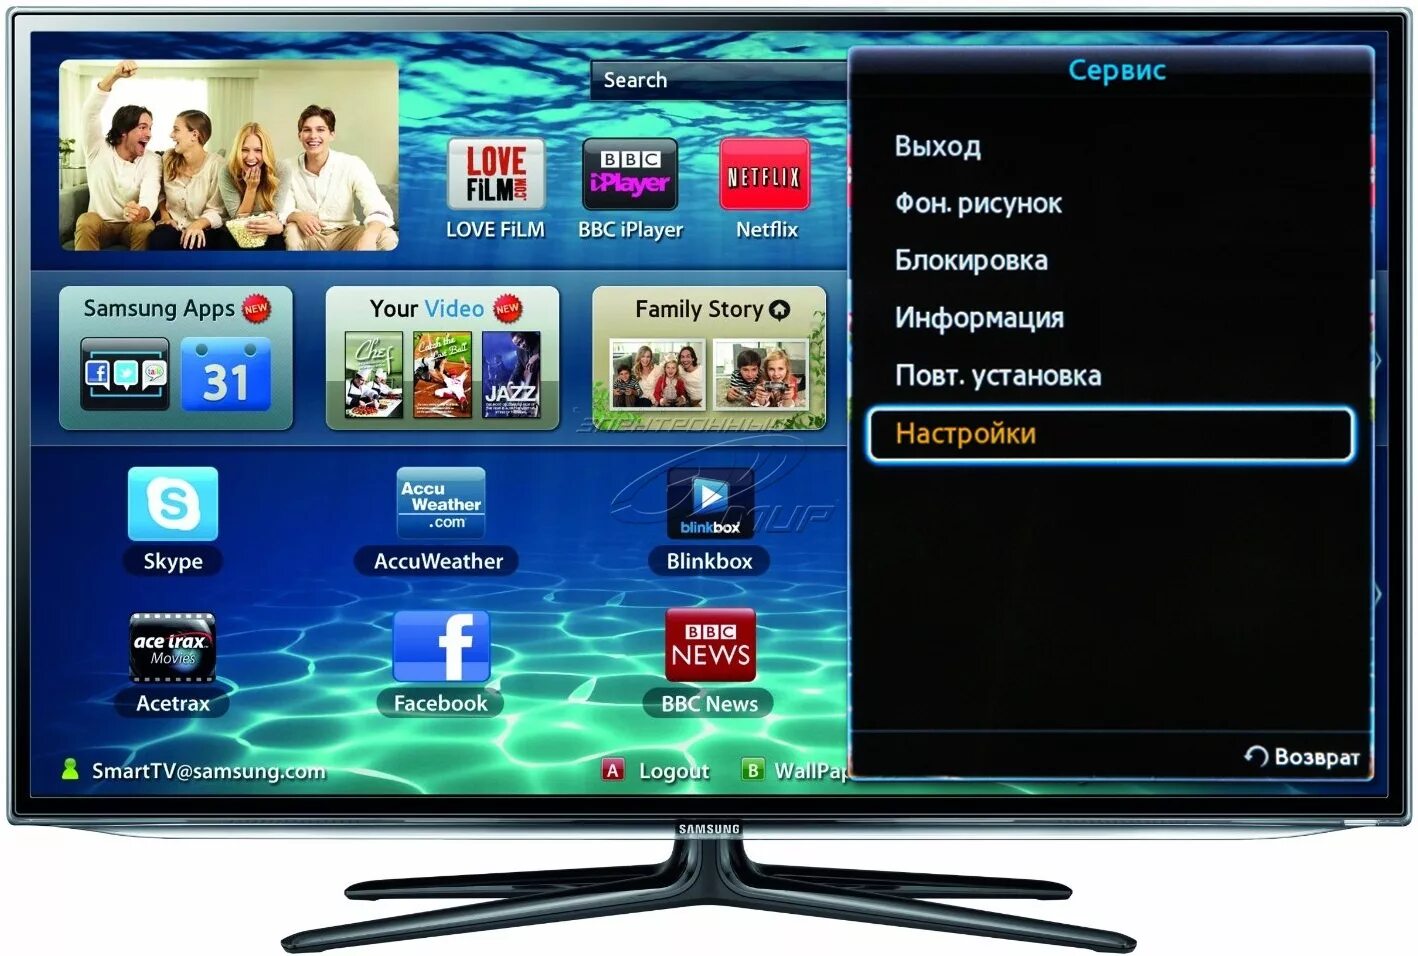 Телевизор самсунг параметры. Как настроить смарт телевизор Samsung. Телевизор самсунг смарт ТВ. Samsung TV DLNA. Как настроить смарт ТВ на телевизоре самсунг.